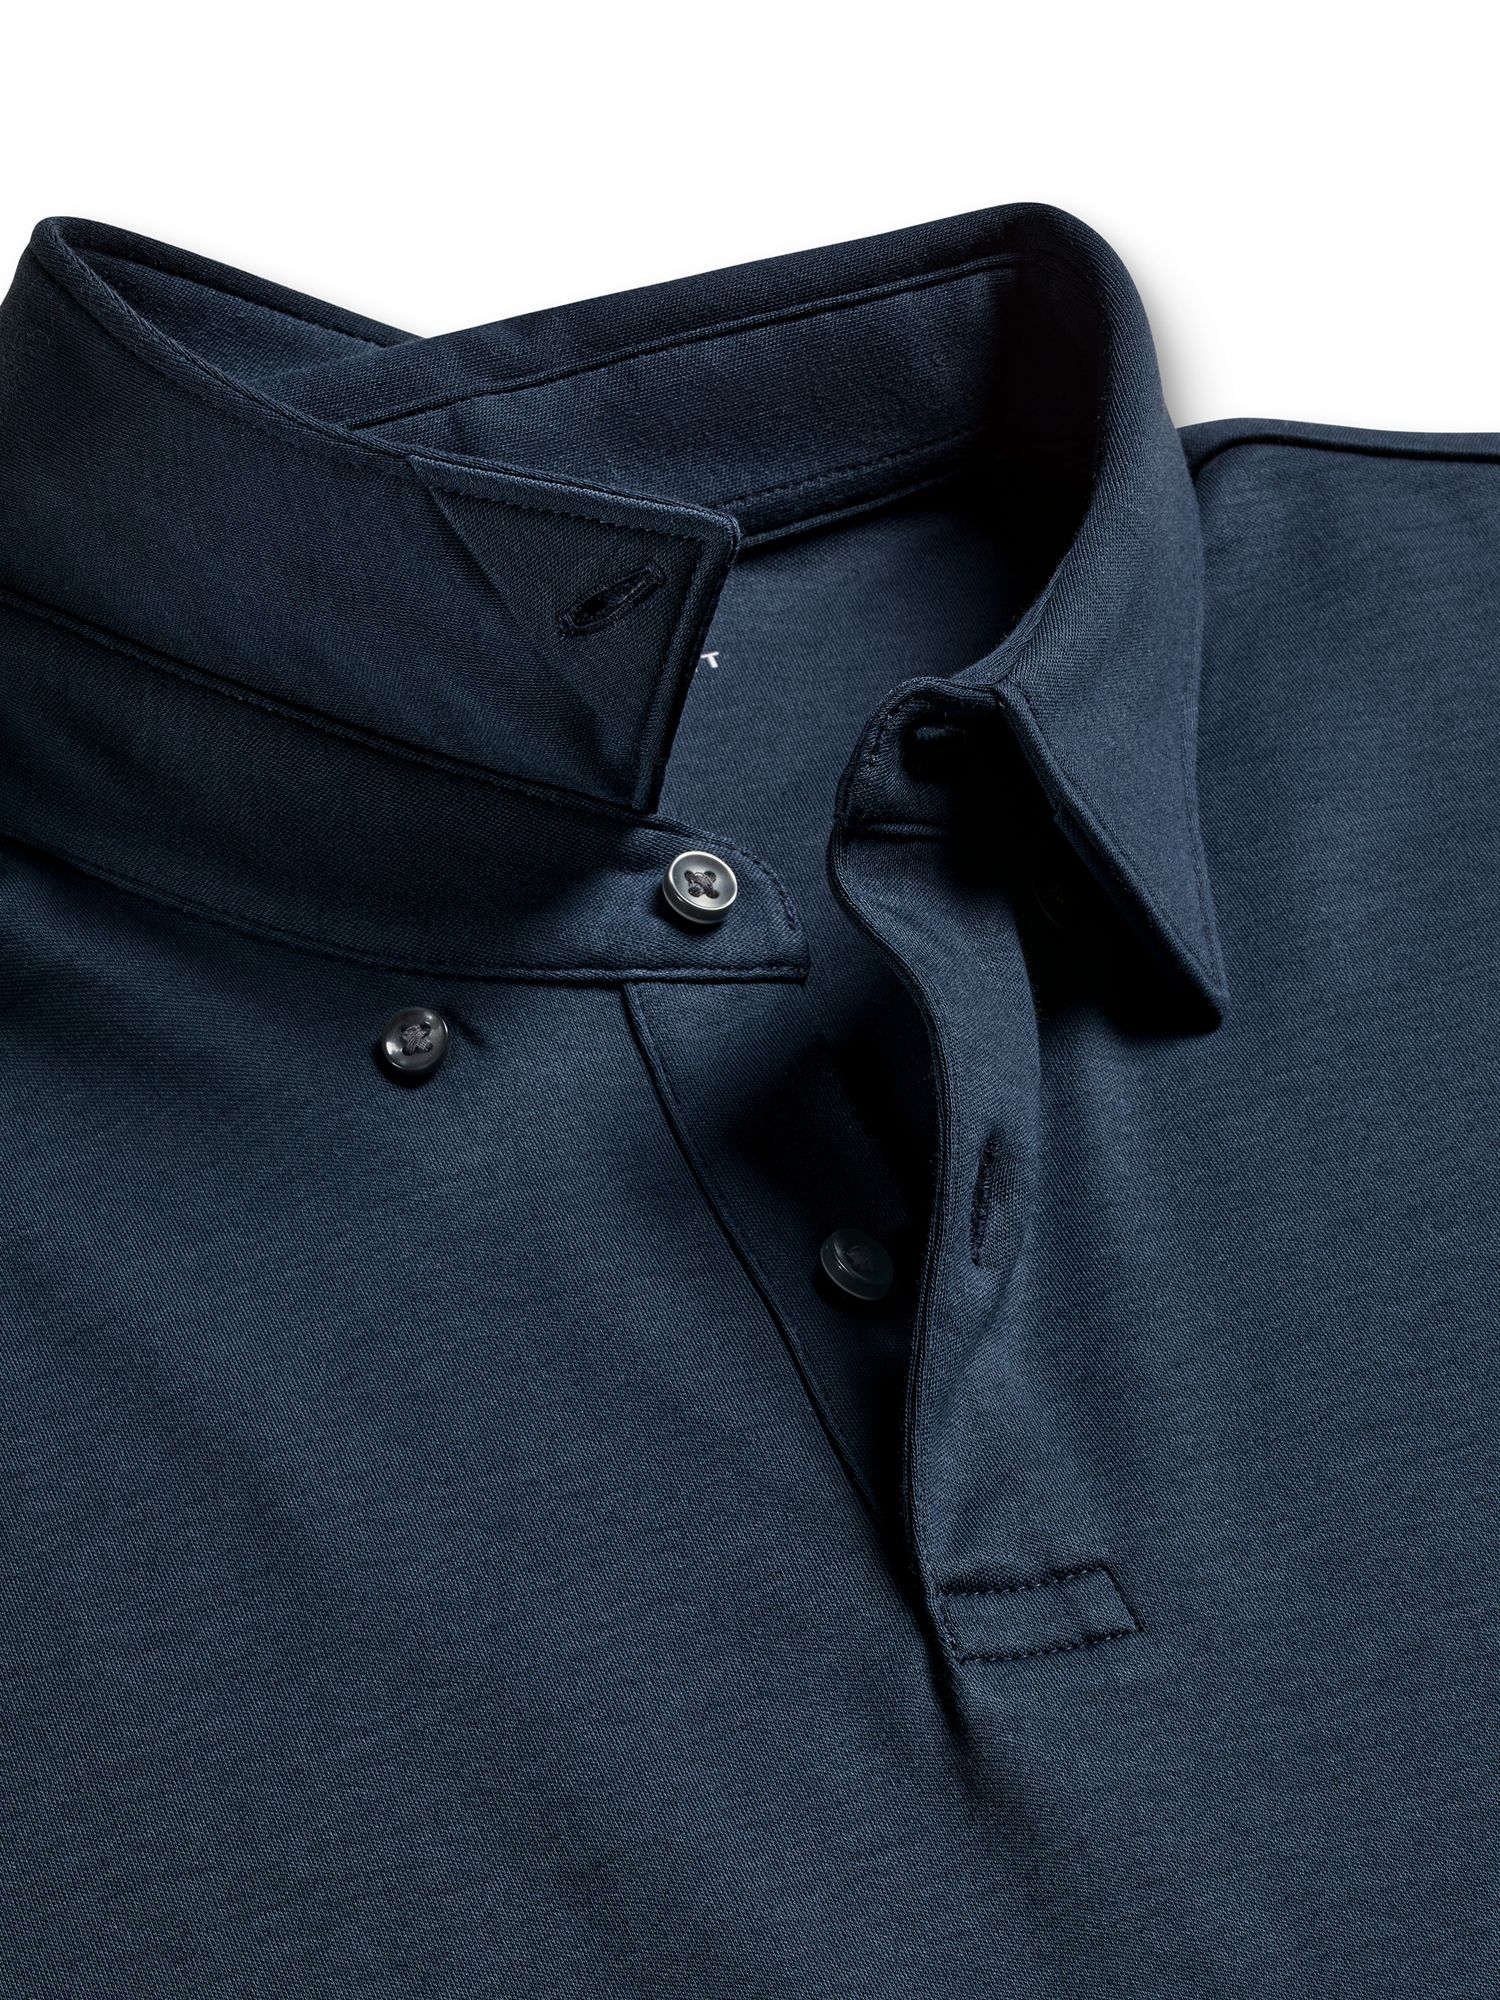 Charles Tyrwhitt Short Sleeve Jersey Polo Shirt, Petrol Blue, S